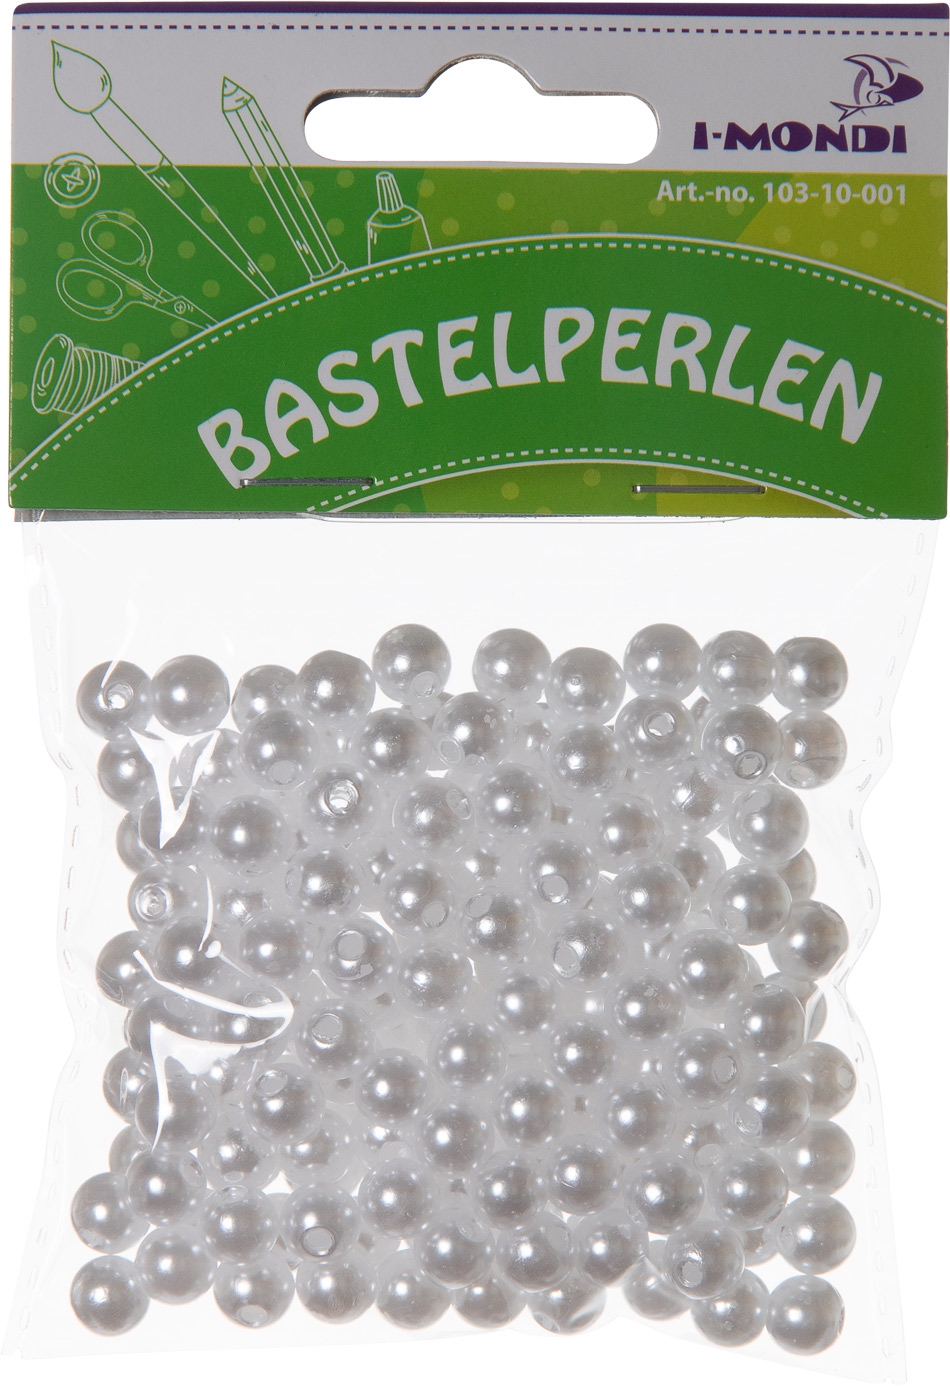 I-MONDI Bastelperlen Ø 0,8 cm creme